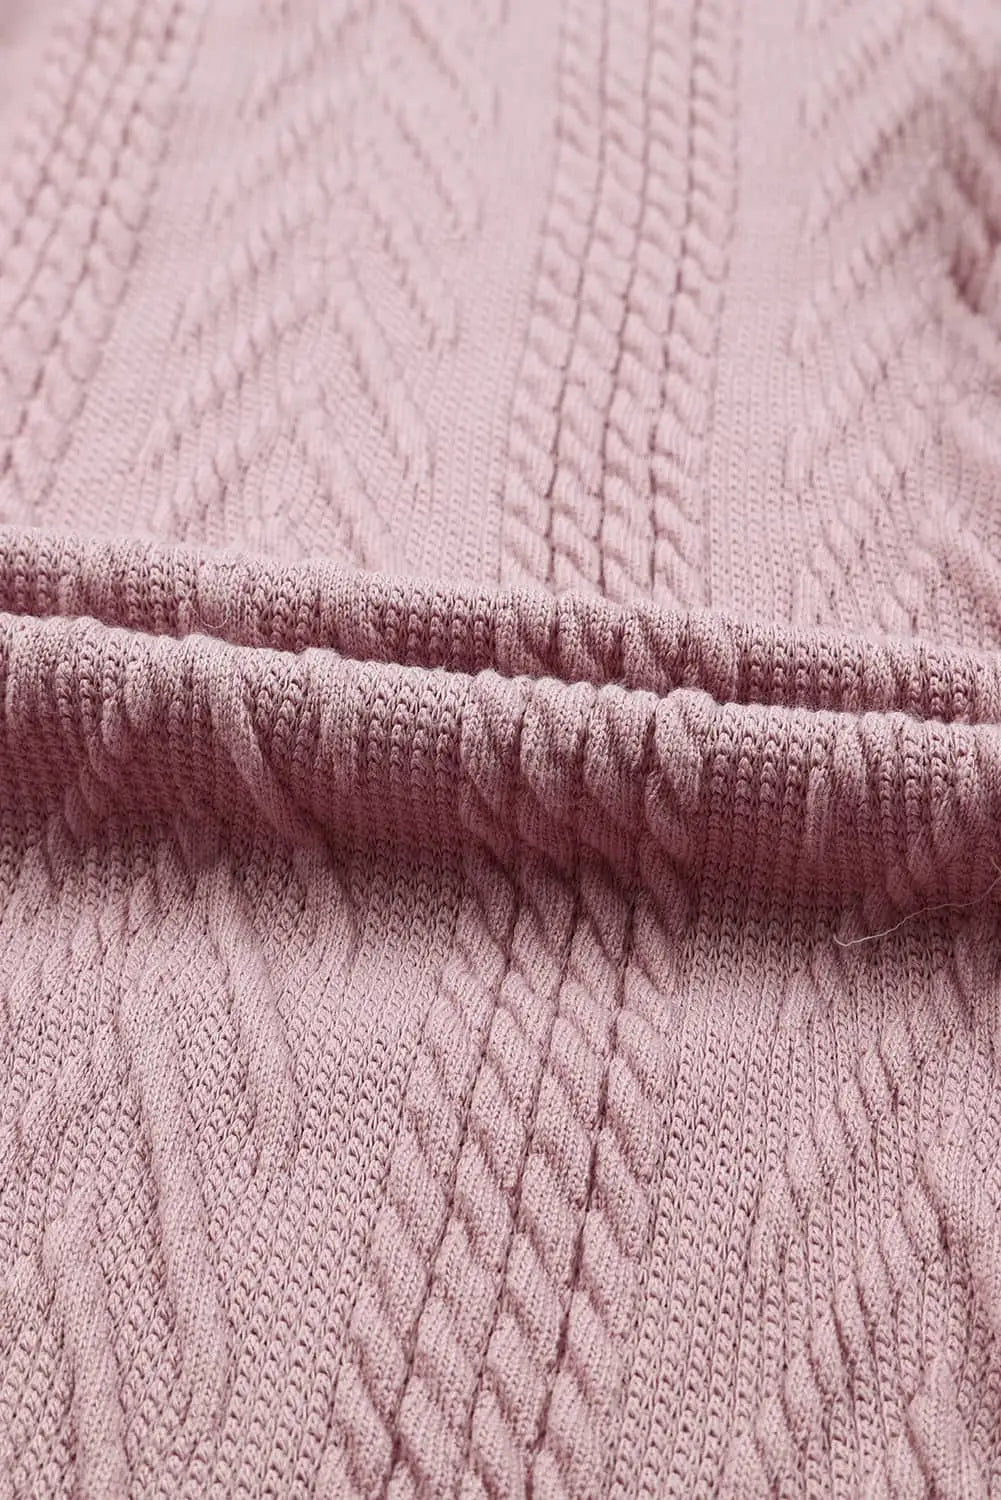 Pink drop shoulder textured cardigan - sweaters & cardigans